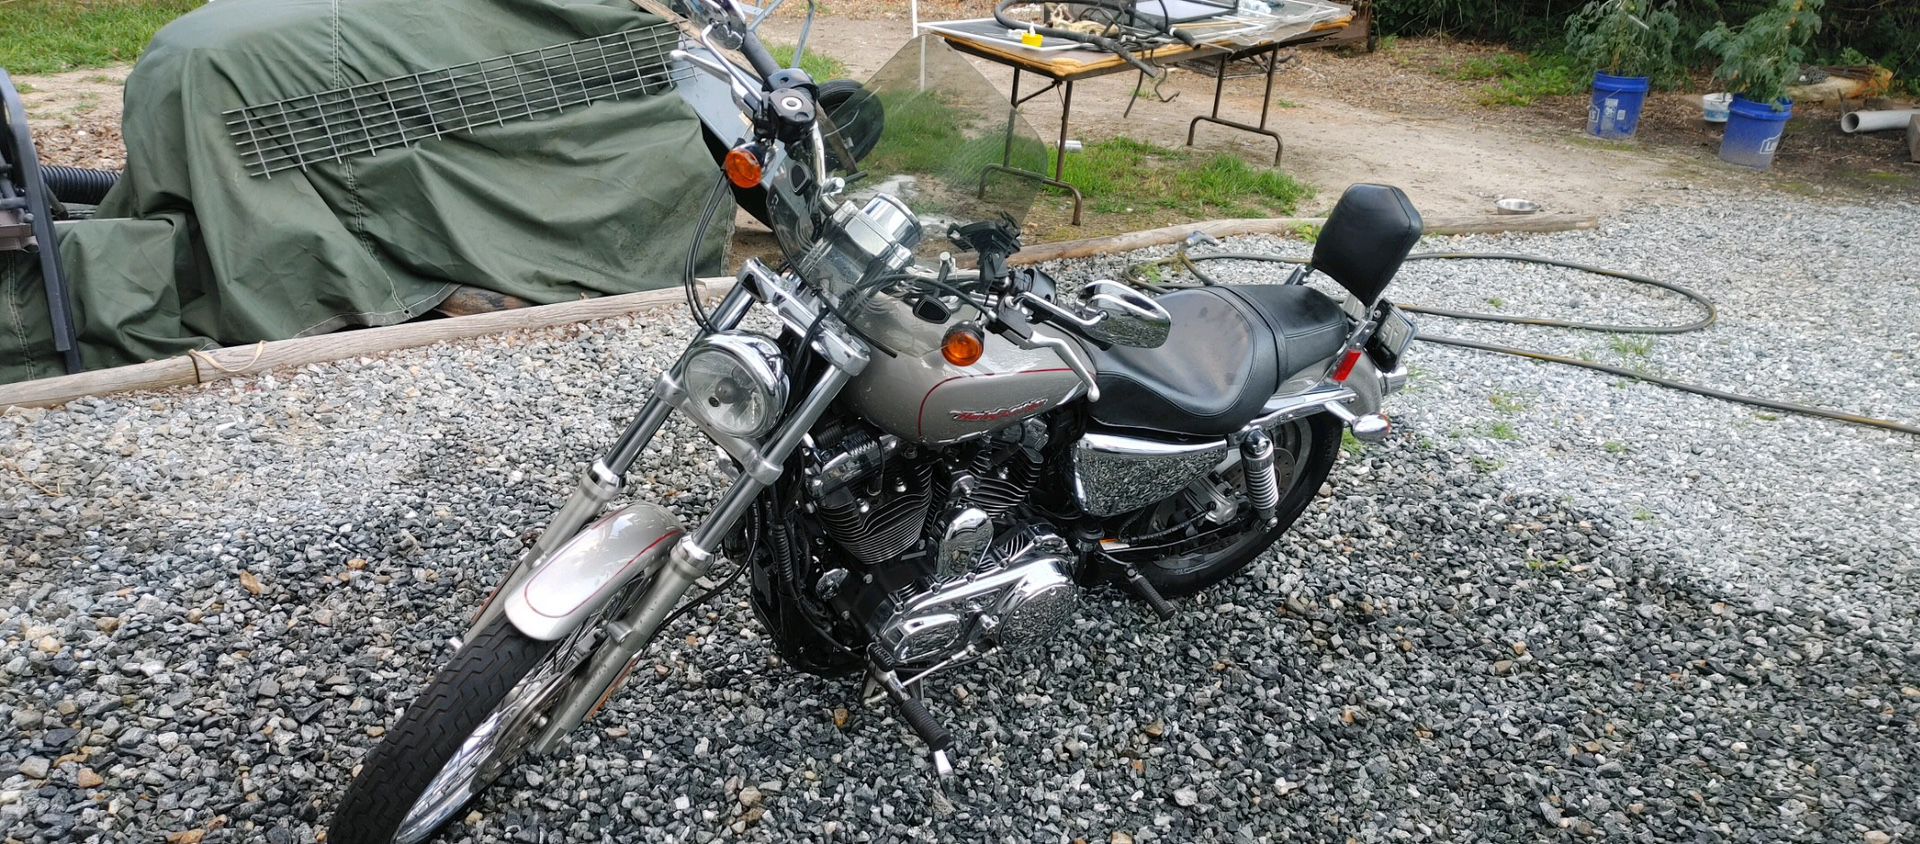 07 Silver 1200 Harley Sportster 